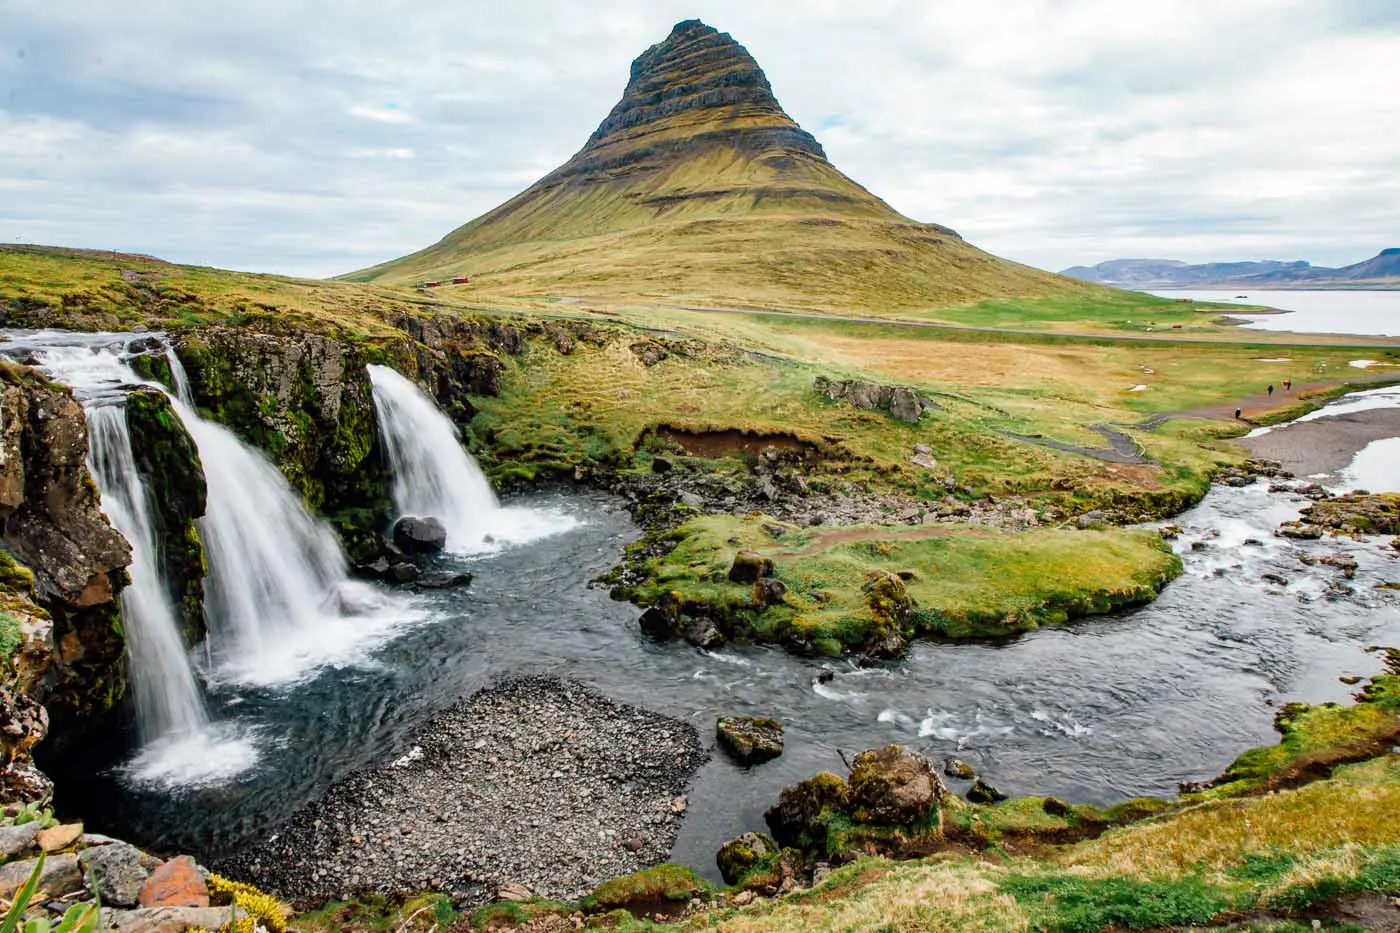 The three Kirkjufellsfoss waterfalls with the Kirkjufell mountain in the background